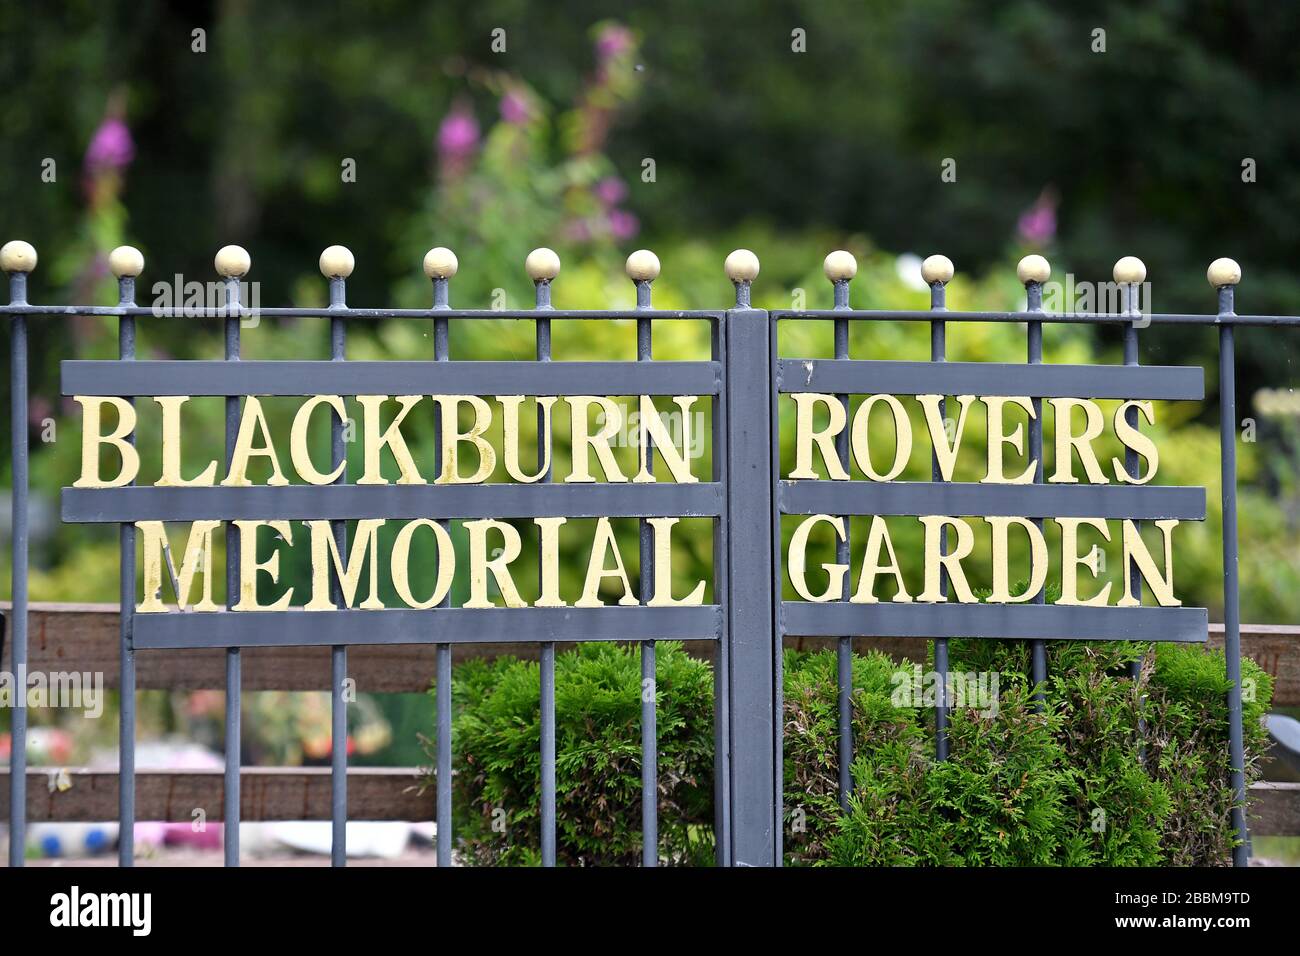 A detail view the Blackburn Rovers Memorial Garden sign Stock Photo